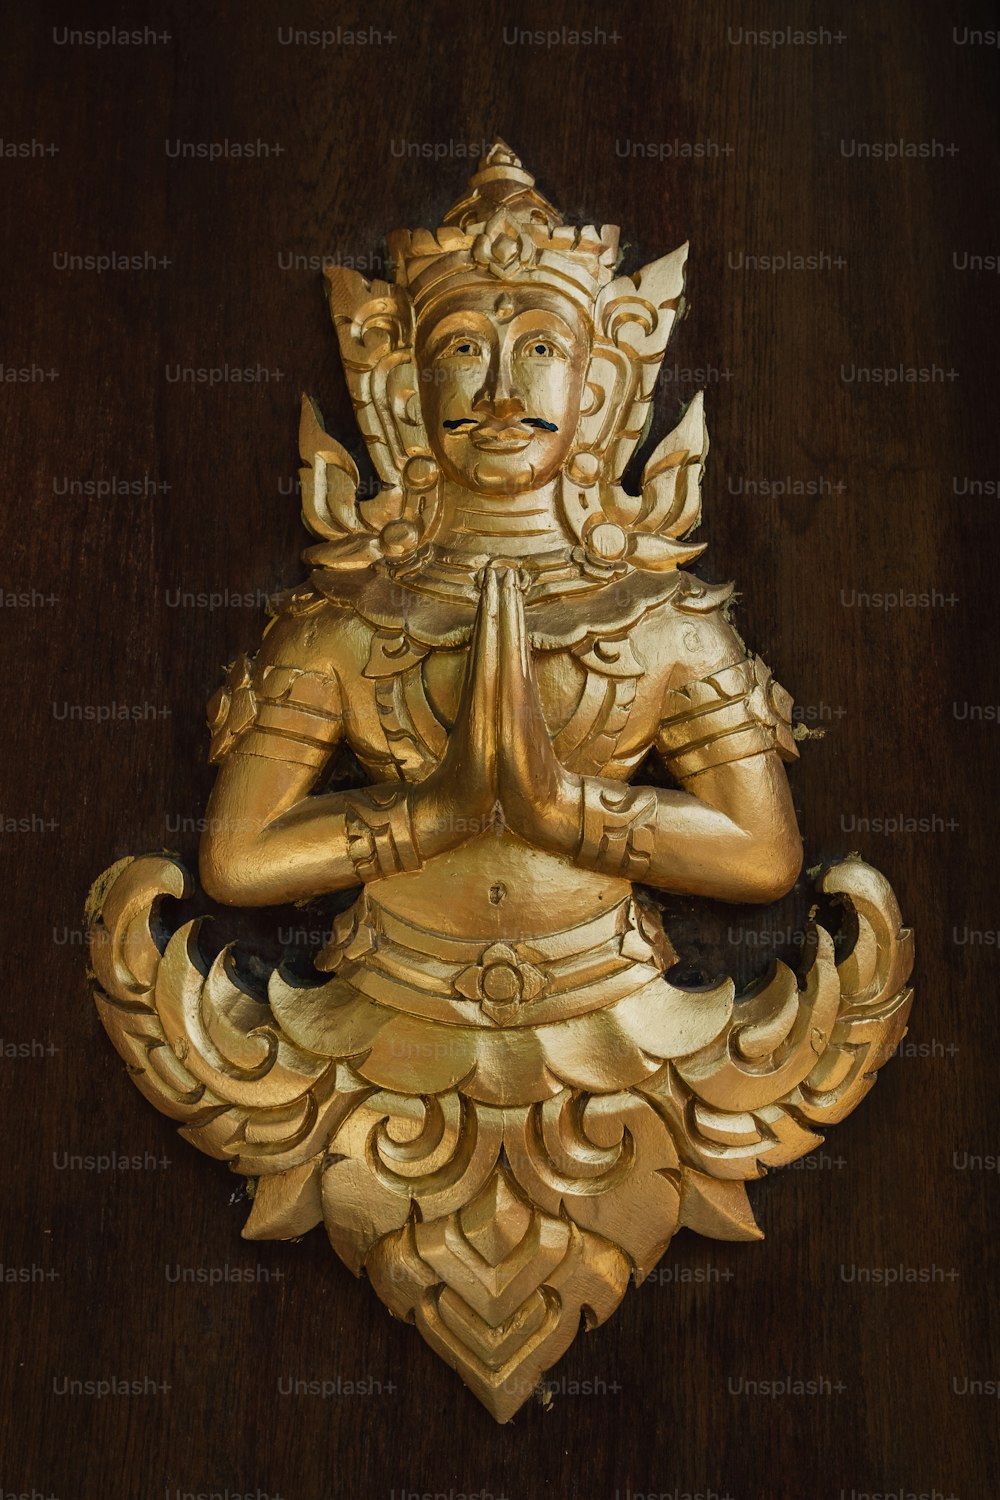 Una statua dorata di una persona seduta in una posizione di loto